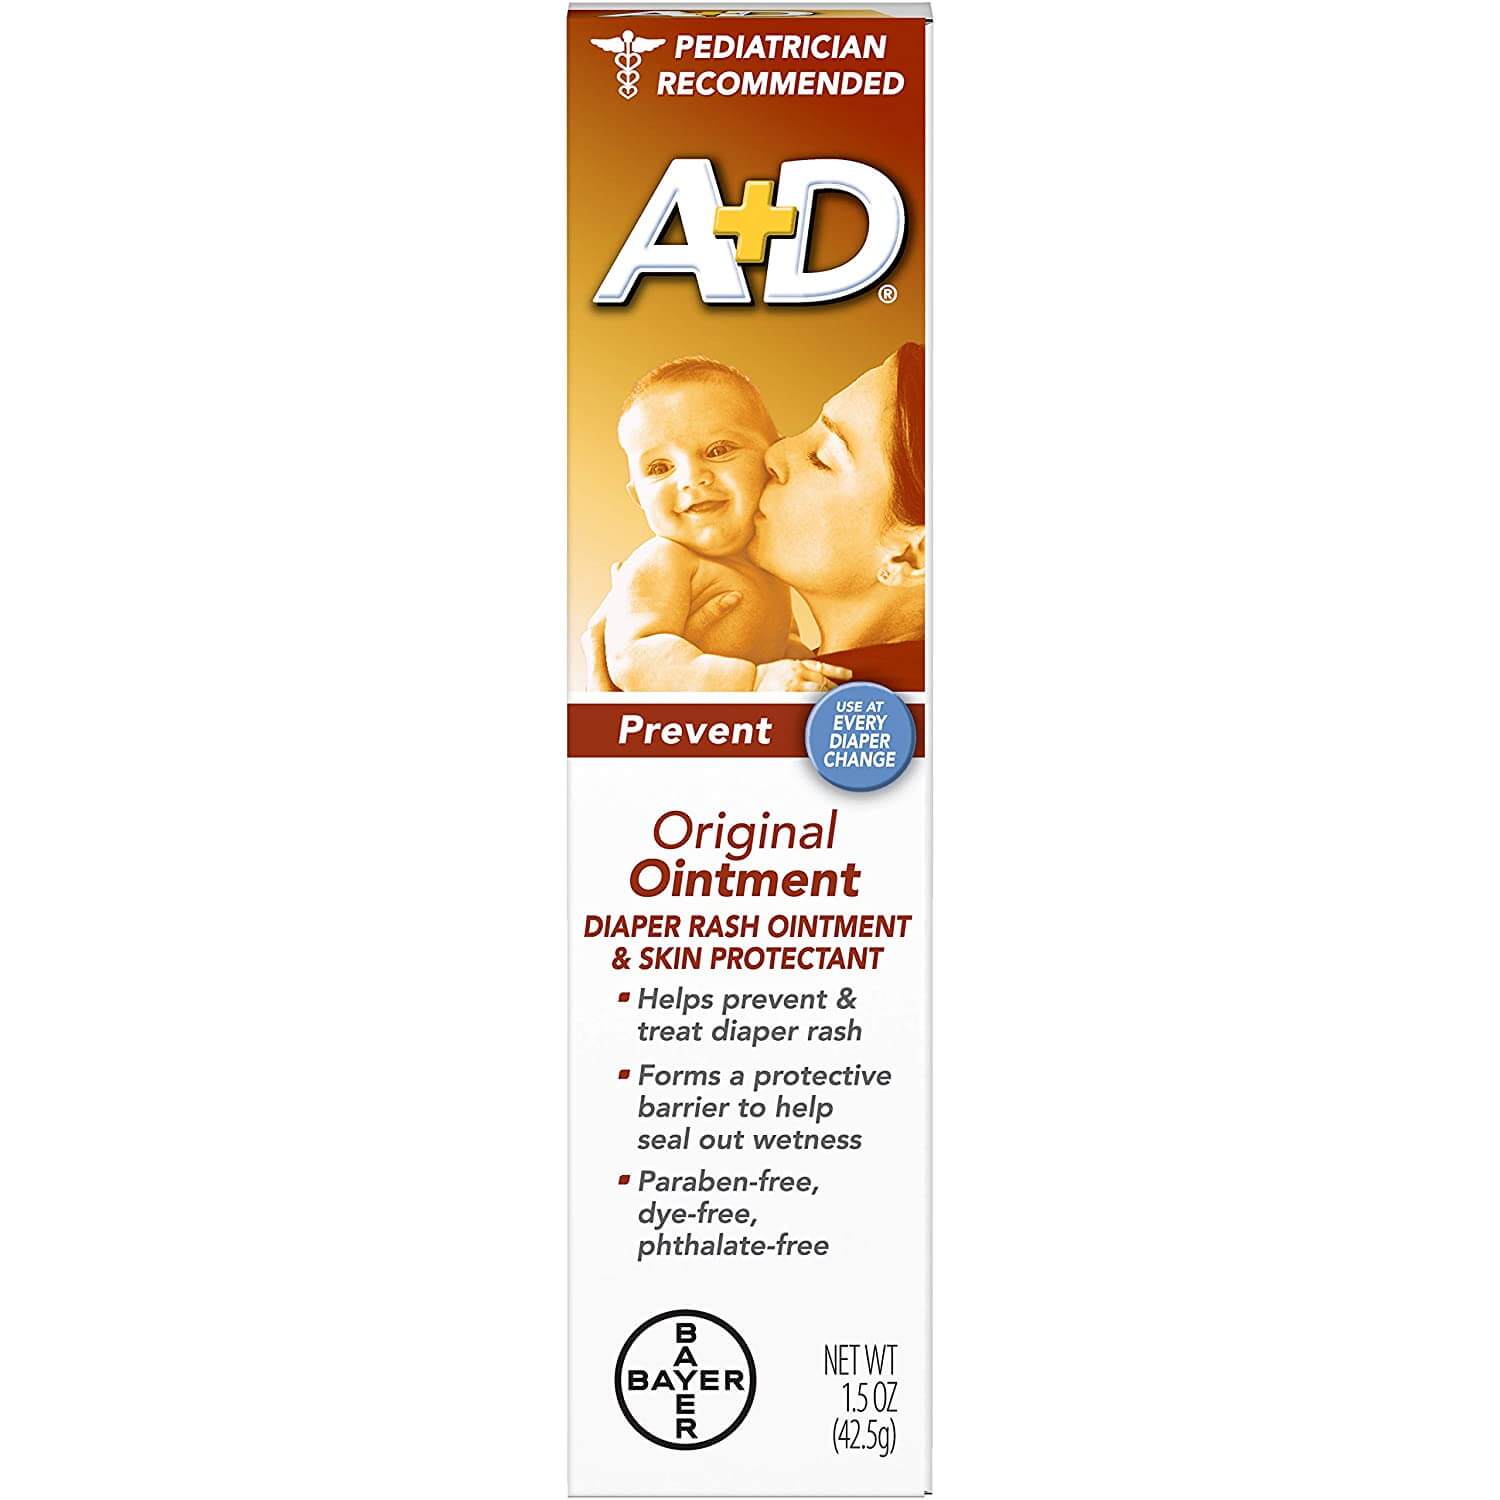 A+D Original Diaper Rash Ointment & Skin Protectant - 113g